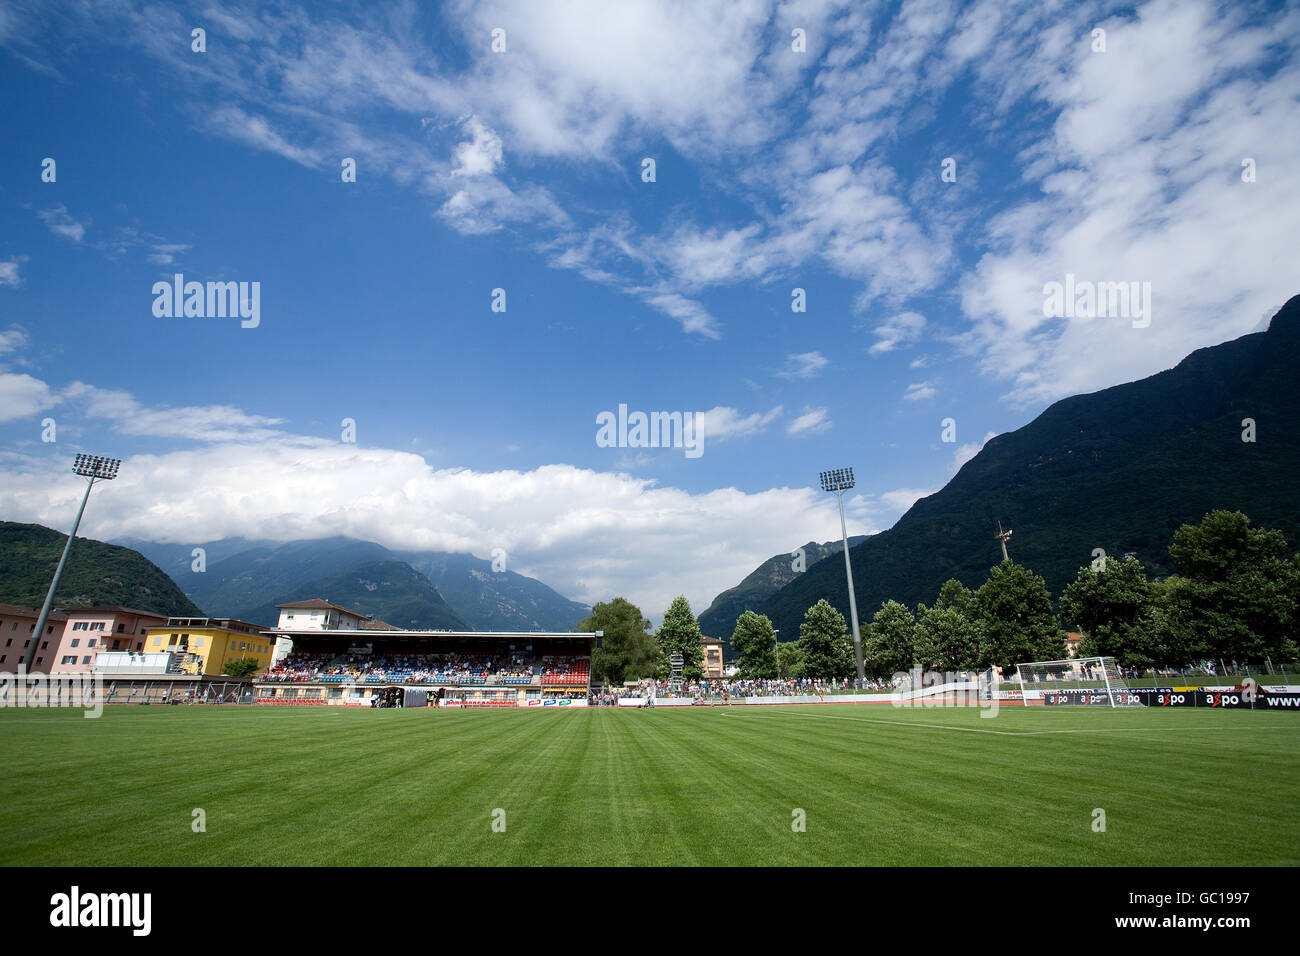 Soccer - Swiss Super League - AC Bellinzona v Neuchatel Xamax - Stadio Comunale Bellinzona. General view of the Stadio Comunale Bellinzona Stock Photo